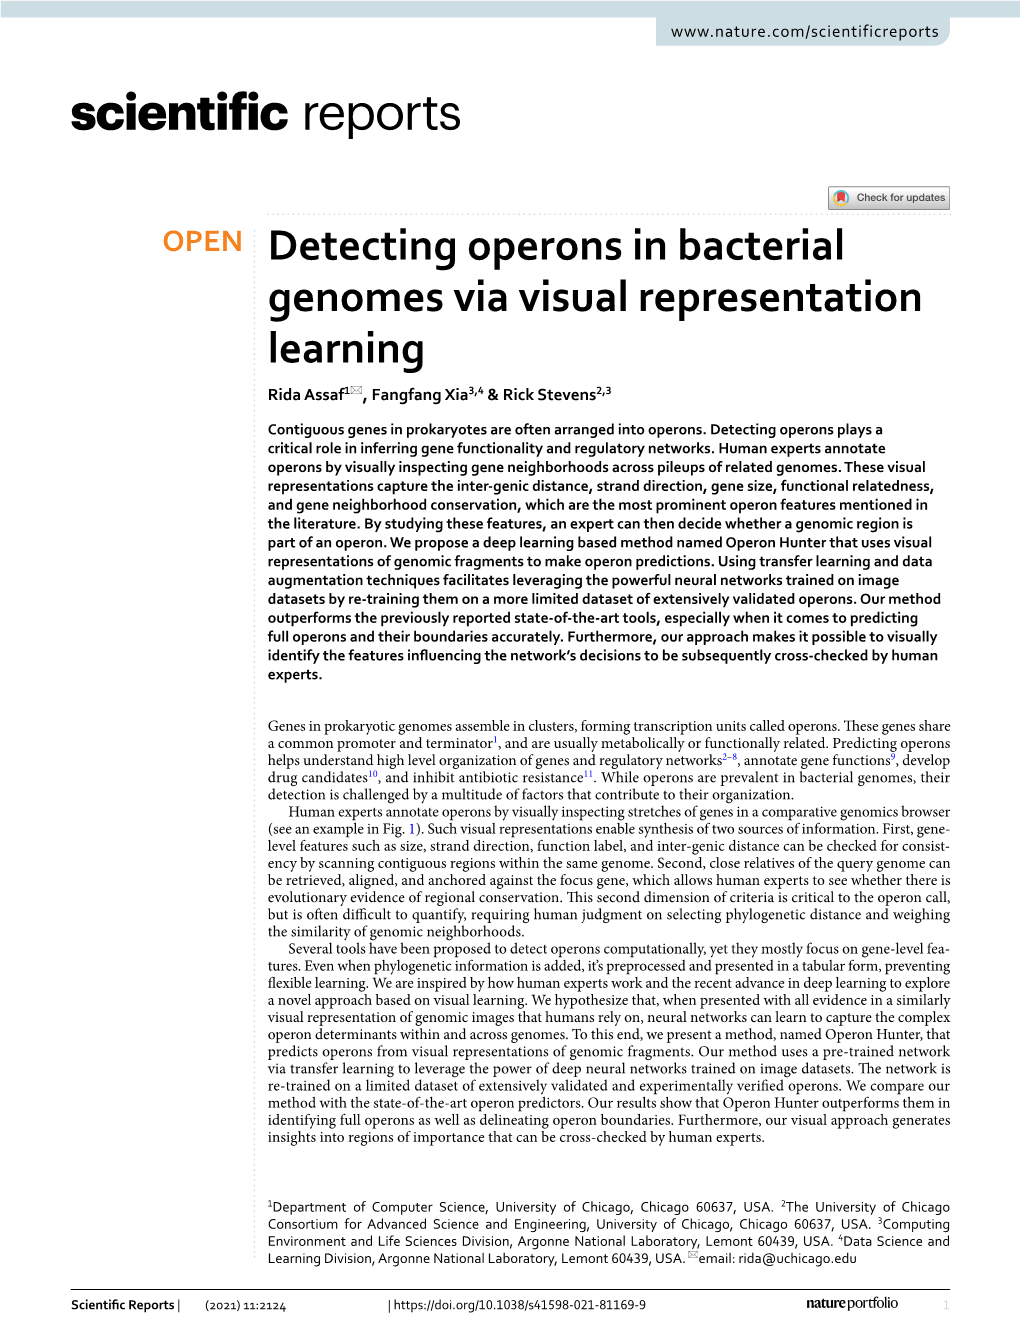 Detecting Operons in Bacterial Genomes Via Visual Representation Learning Rida Assaf1*, Fangfang Xia3,4 & Rick Stevens2,3